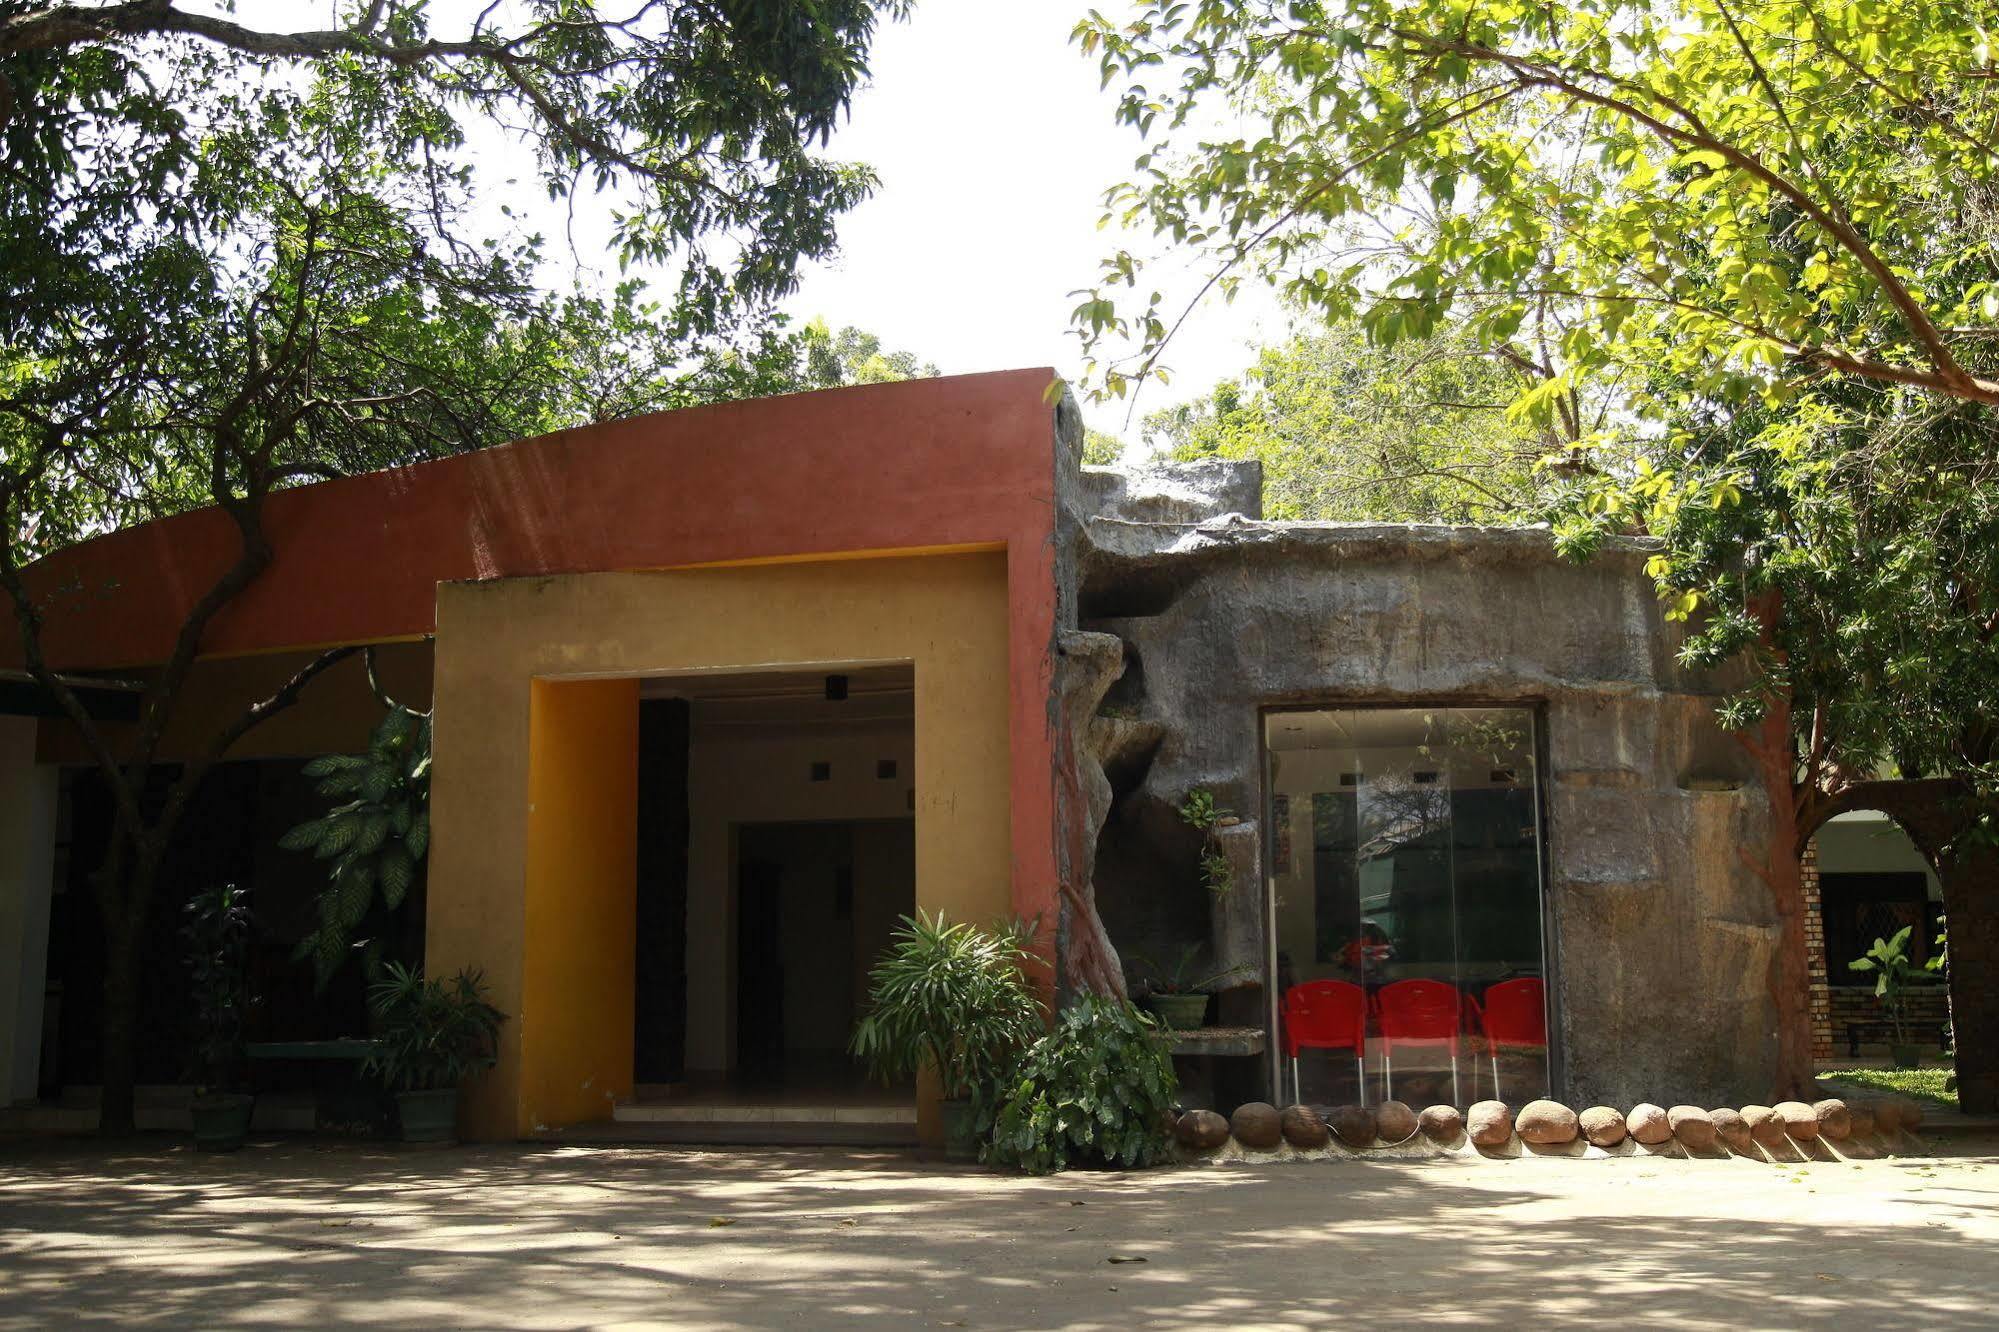 Hotel Cottage Tourist Rest Anuradhapura Exterior foto